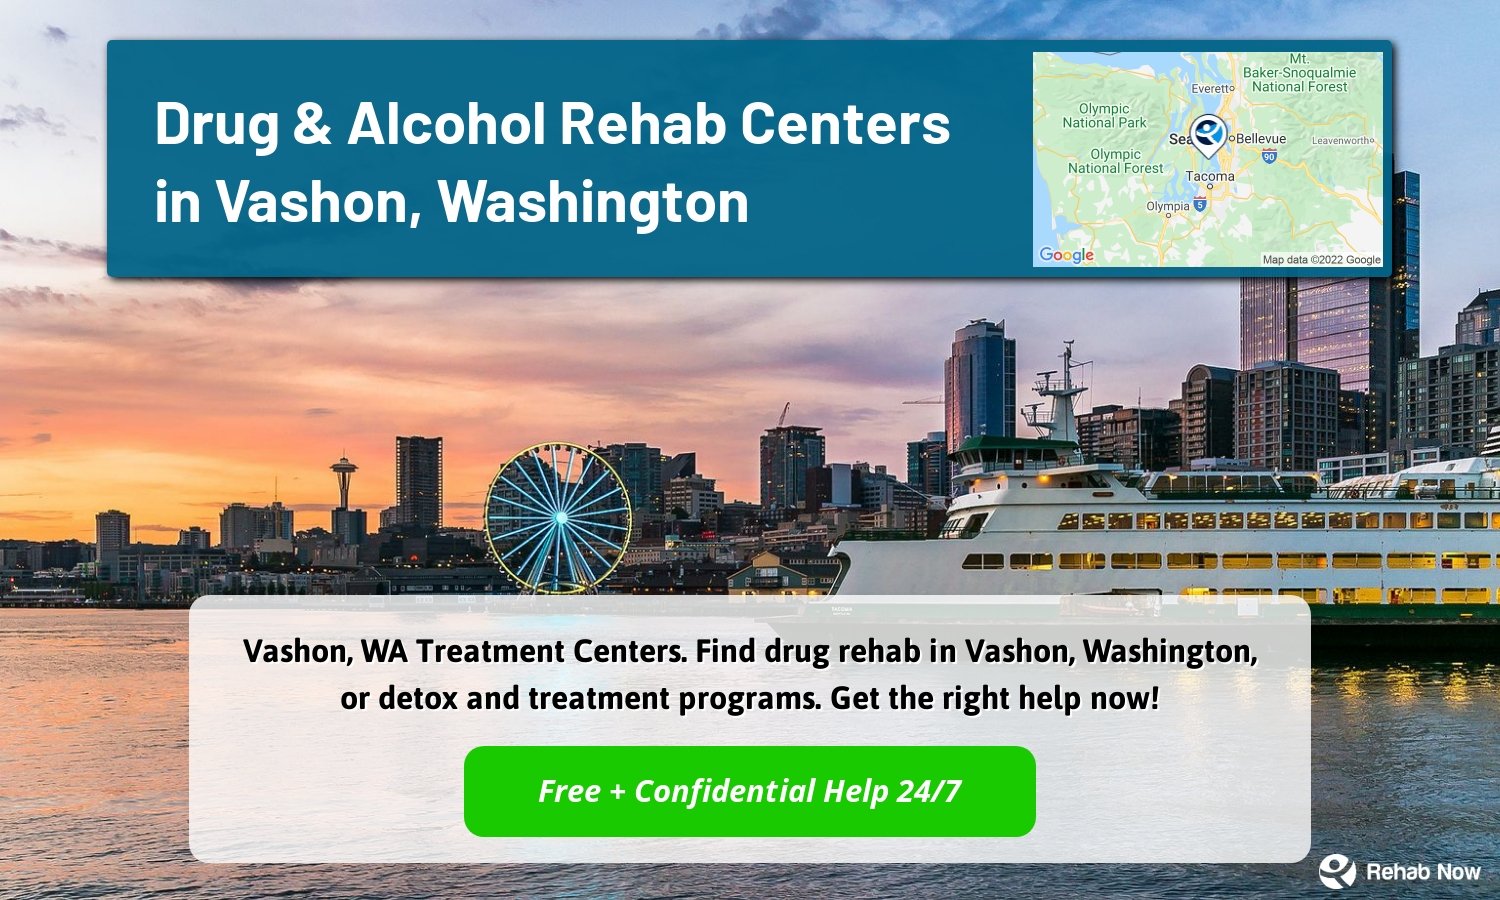 Vashon, WA Treatment Centers. Find drug rehab in Vashon, Washington, or detox and treatment programs. Get the right help now!